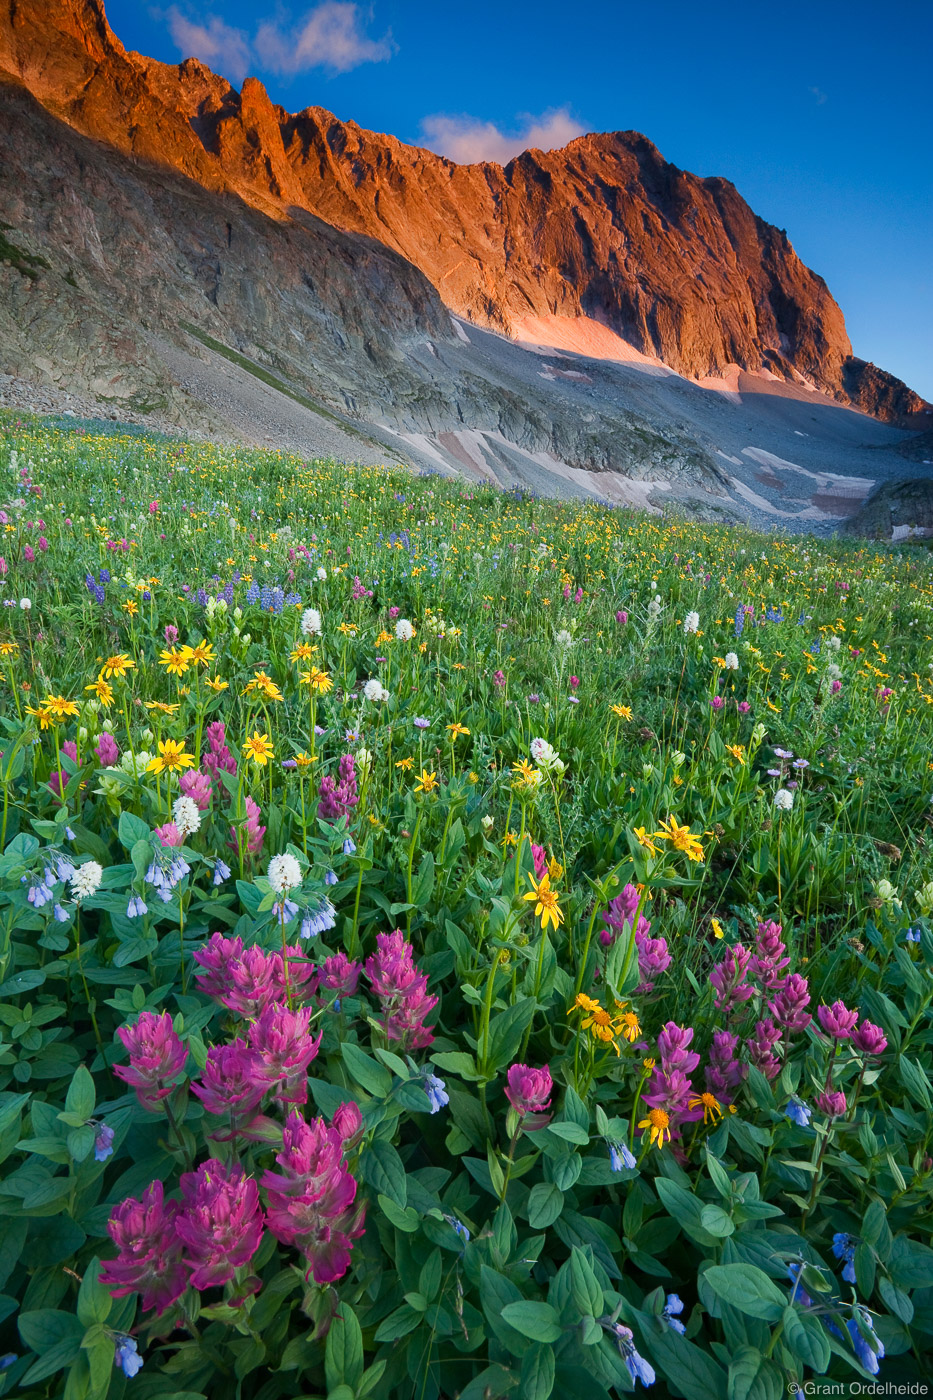 An amazing field of wildflowers below Capitol Peak (14,130)